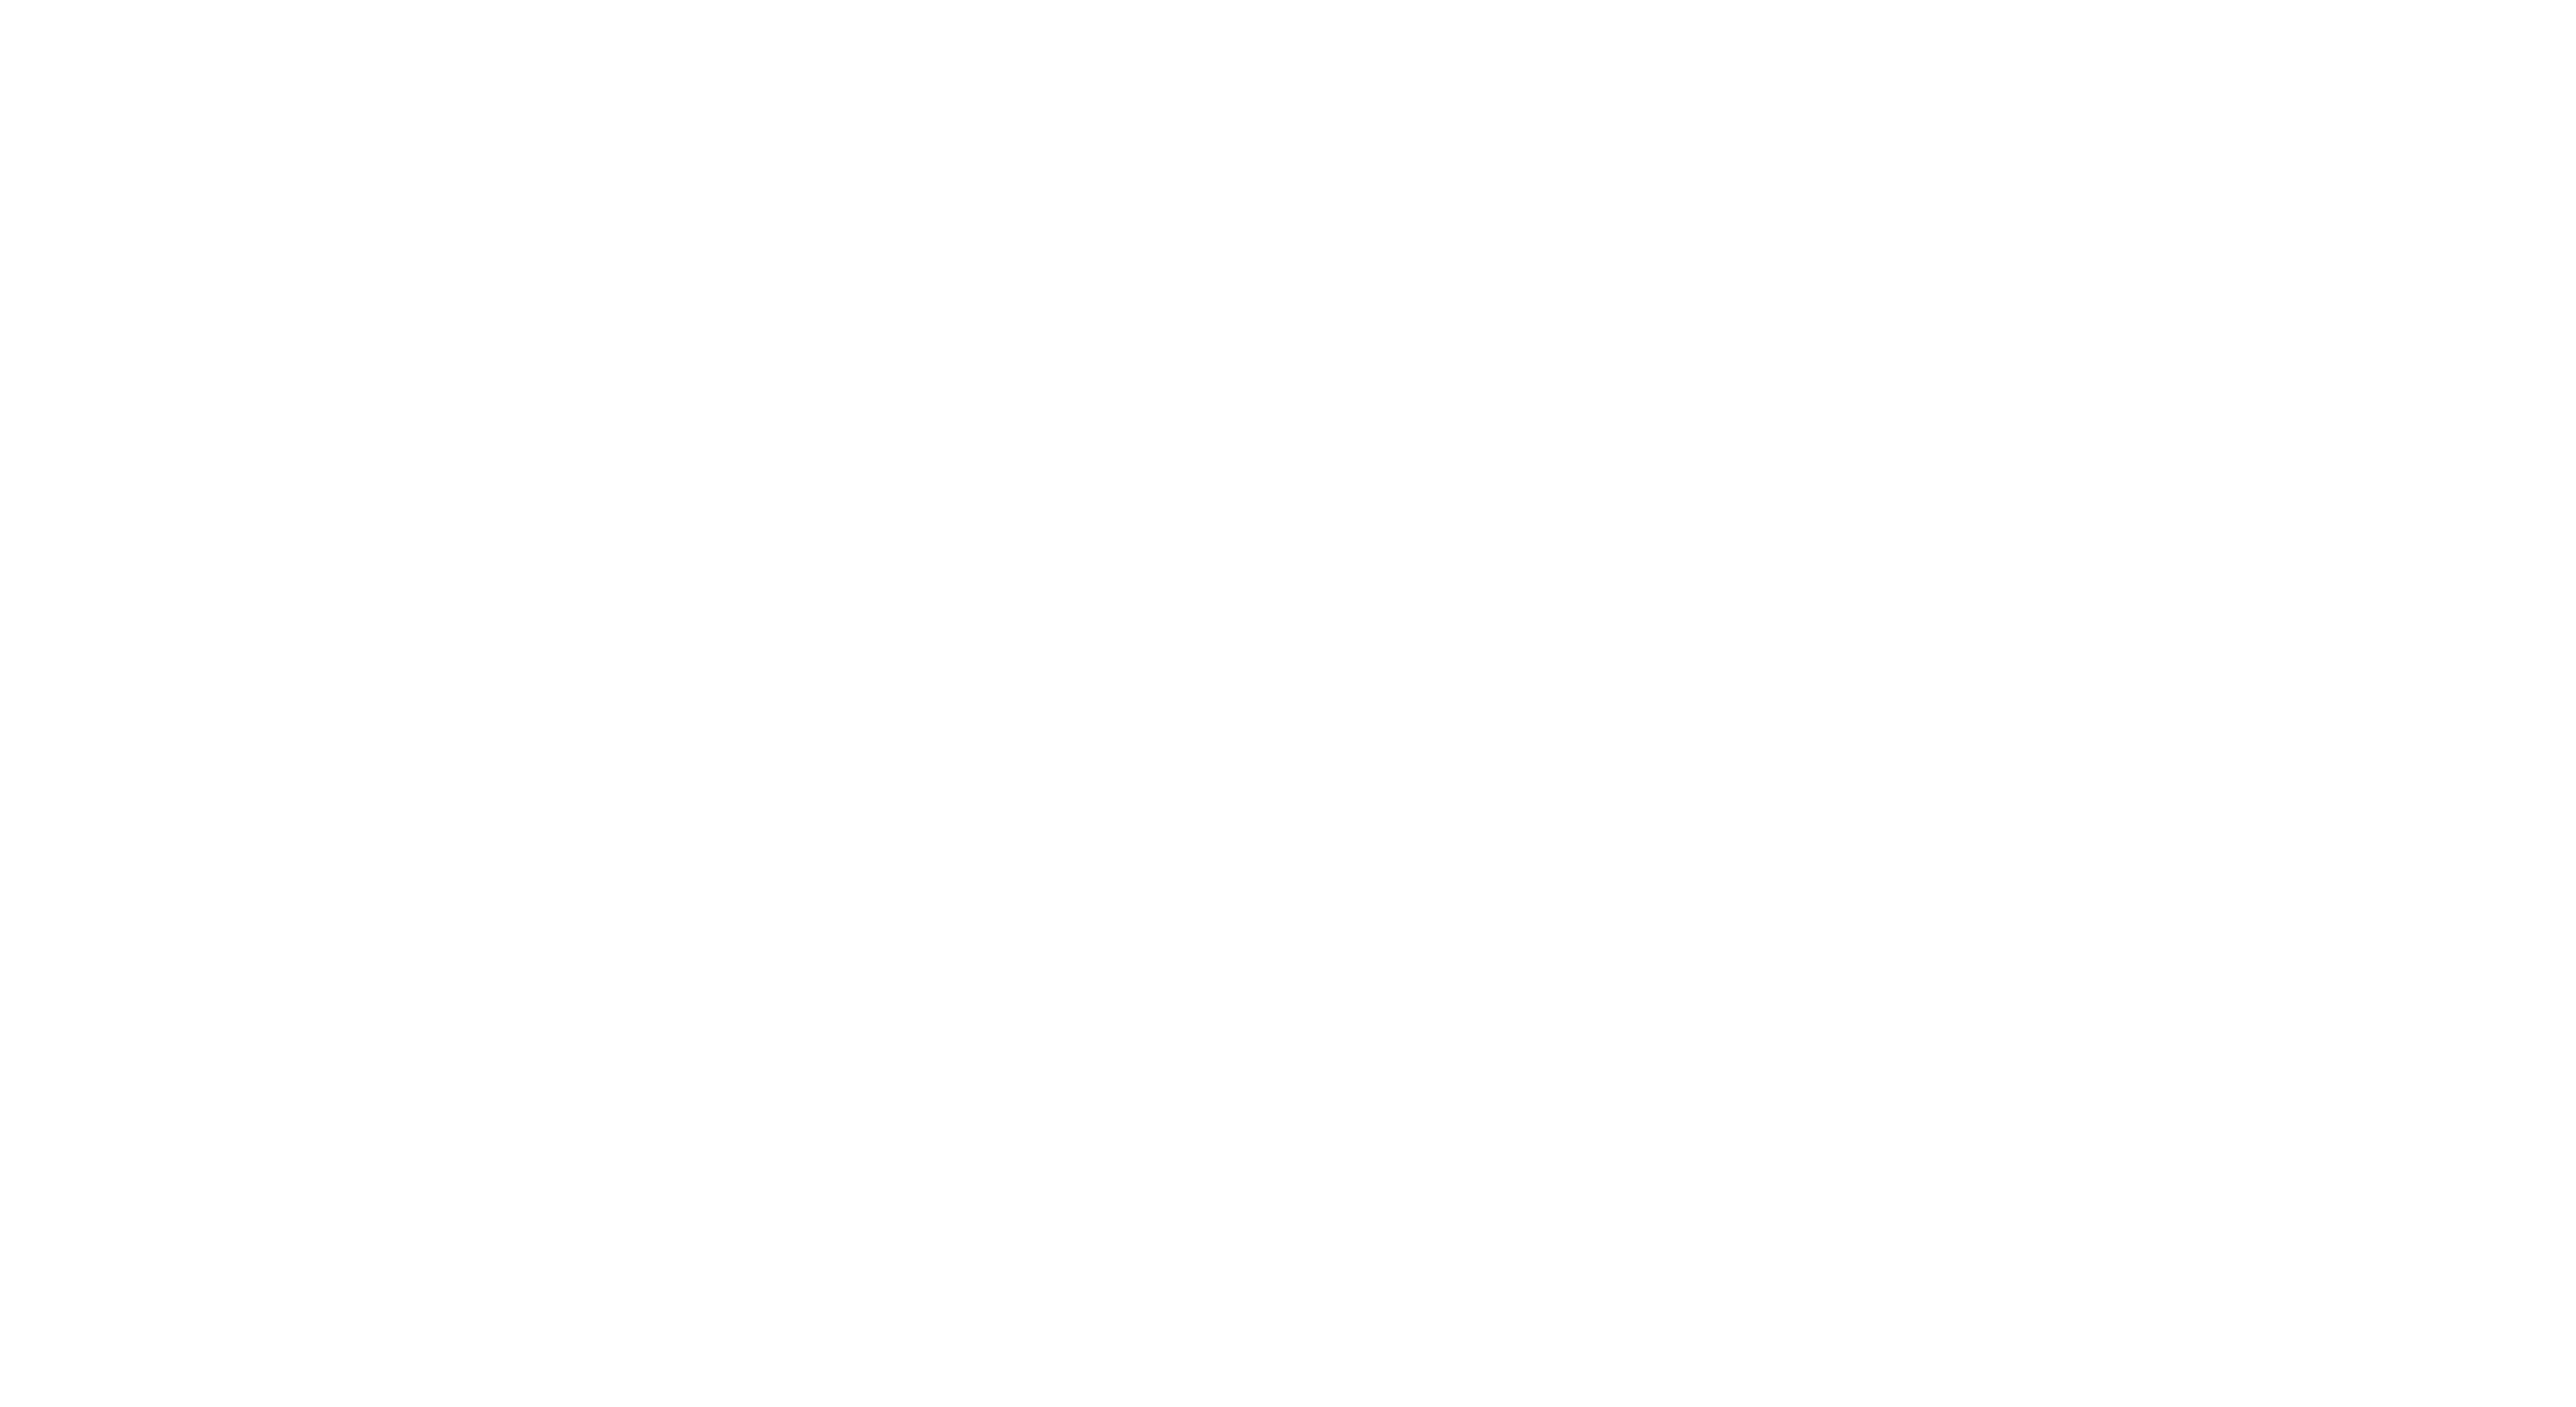 APL comany logo white